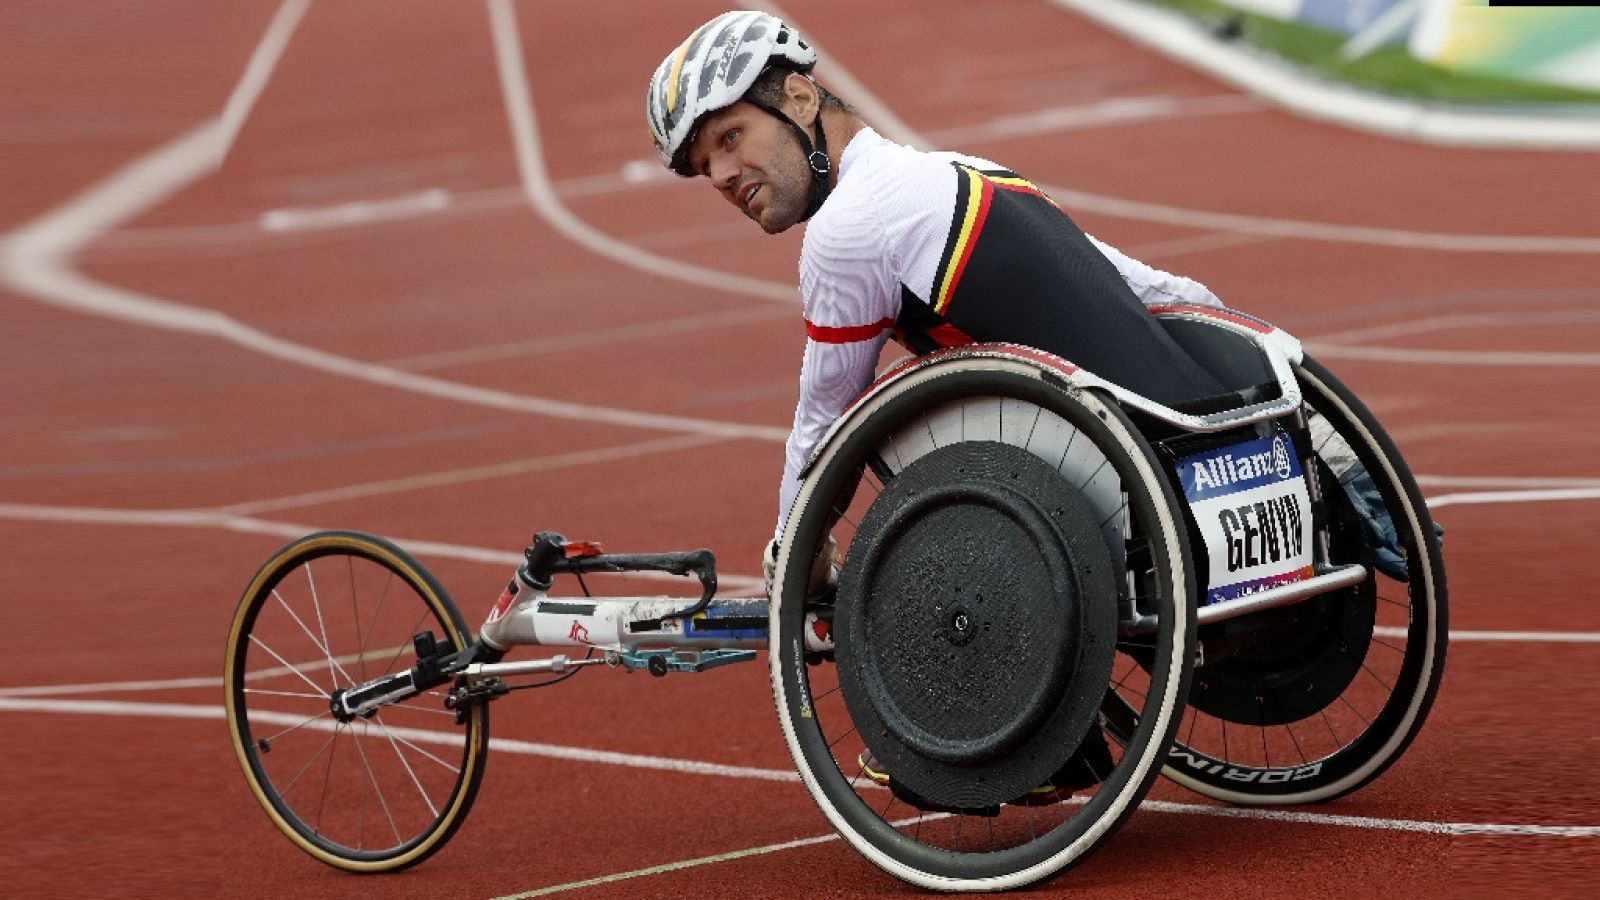 Atletismo - Campeonato de Europa Paralímpico desde Berlín Resumen 5ª jornada